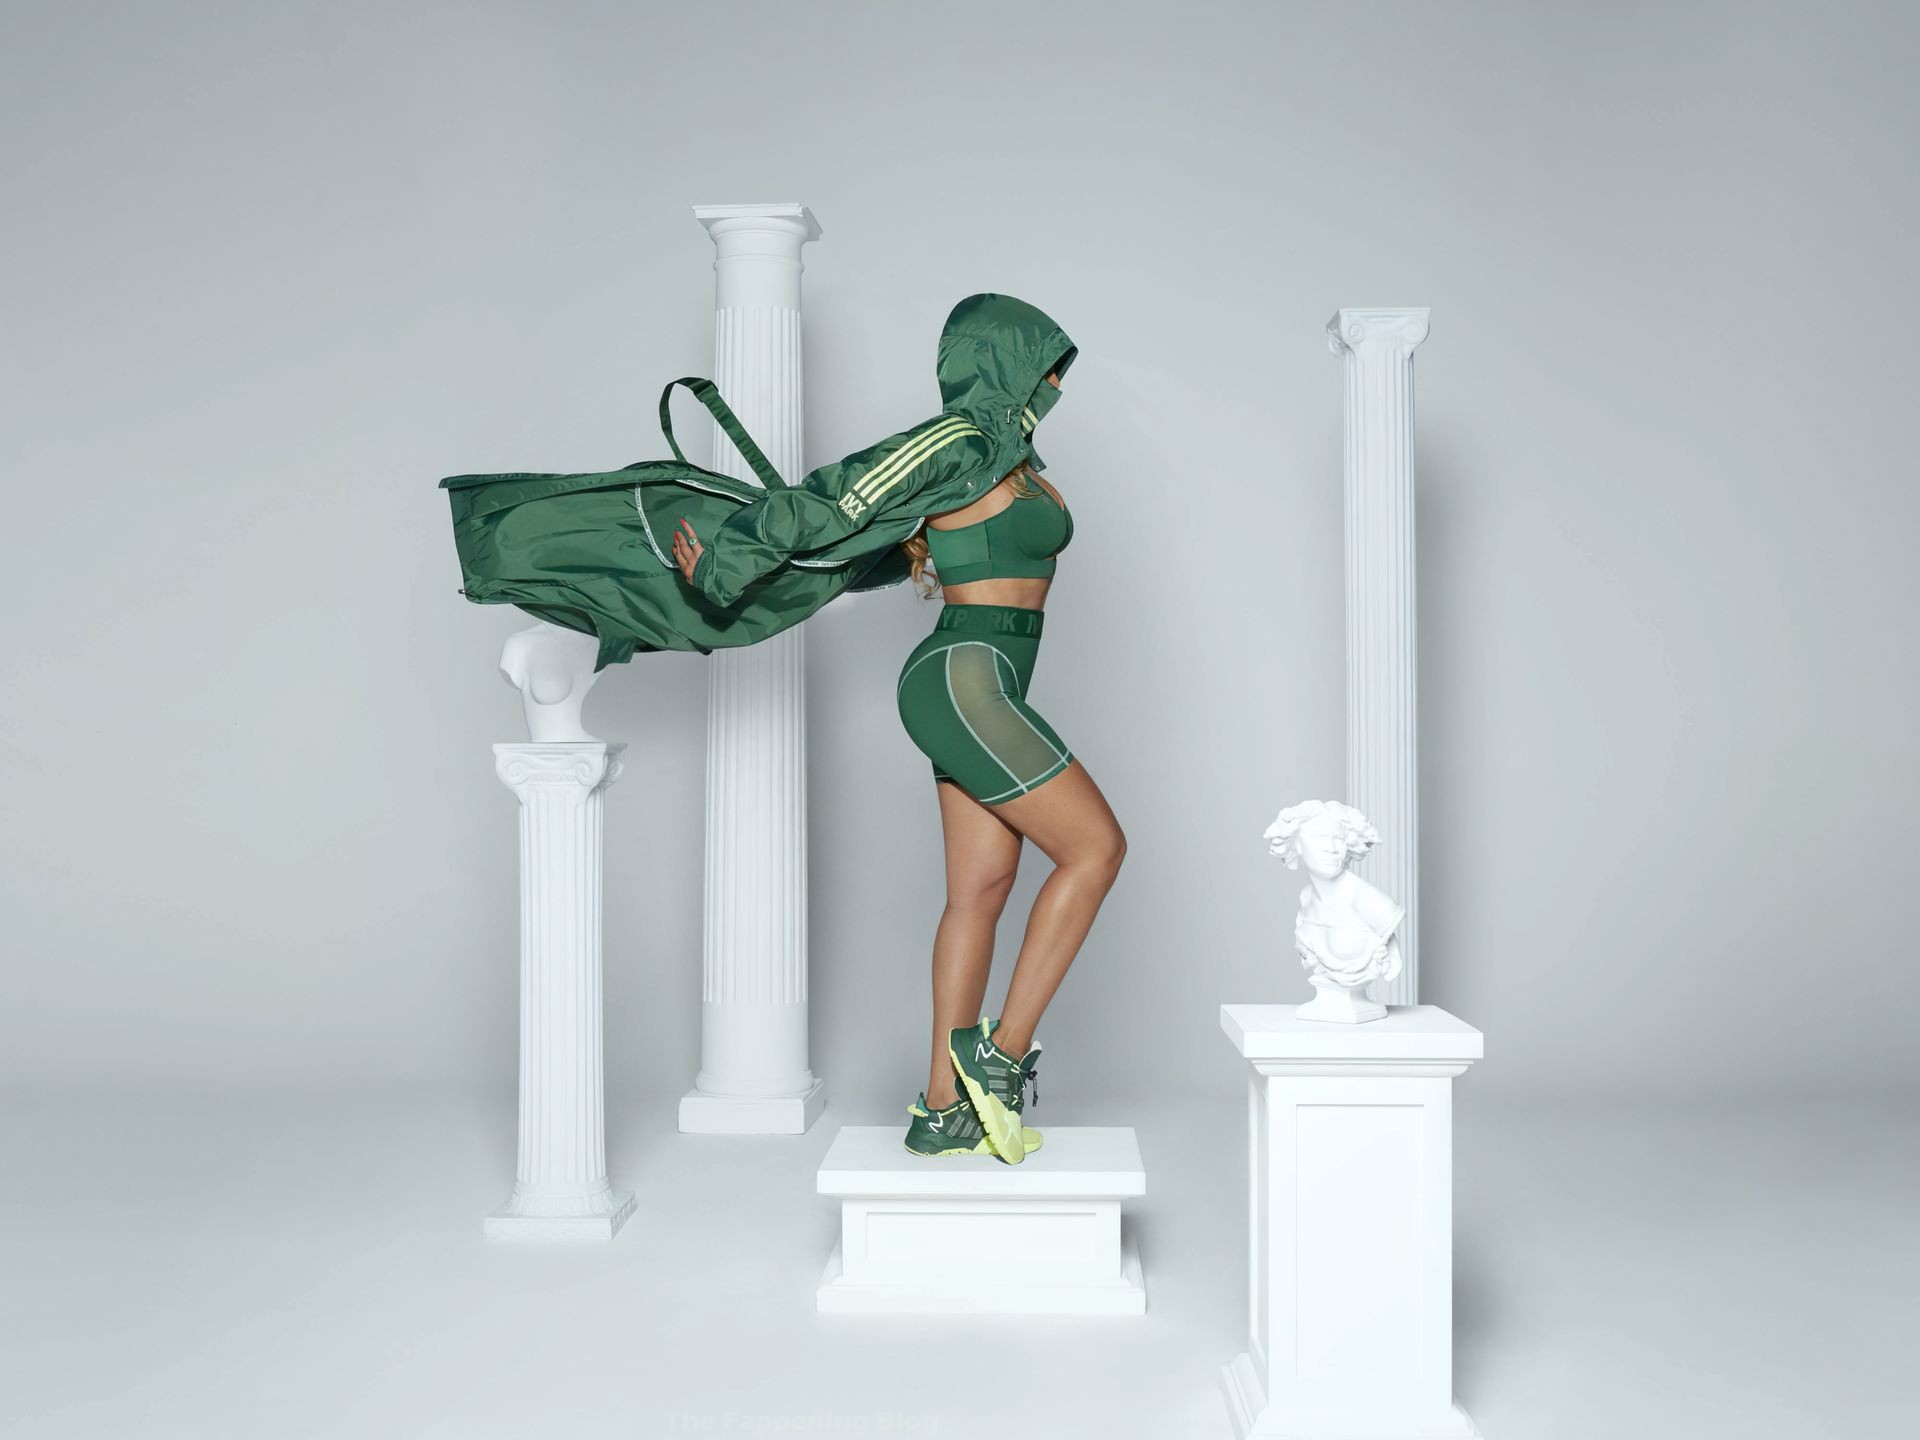 Beyonce Sexy - Adidas x Ivy Park (12 Photos + Video)